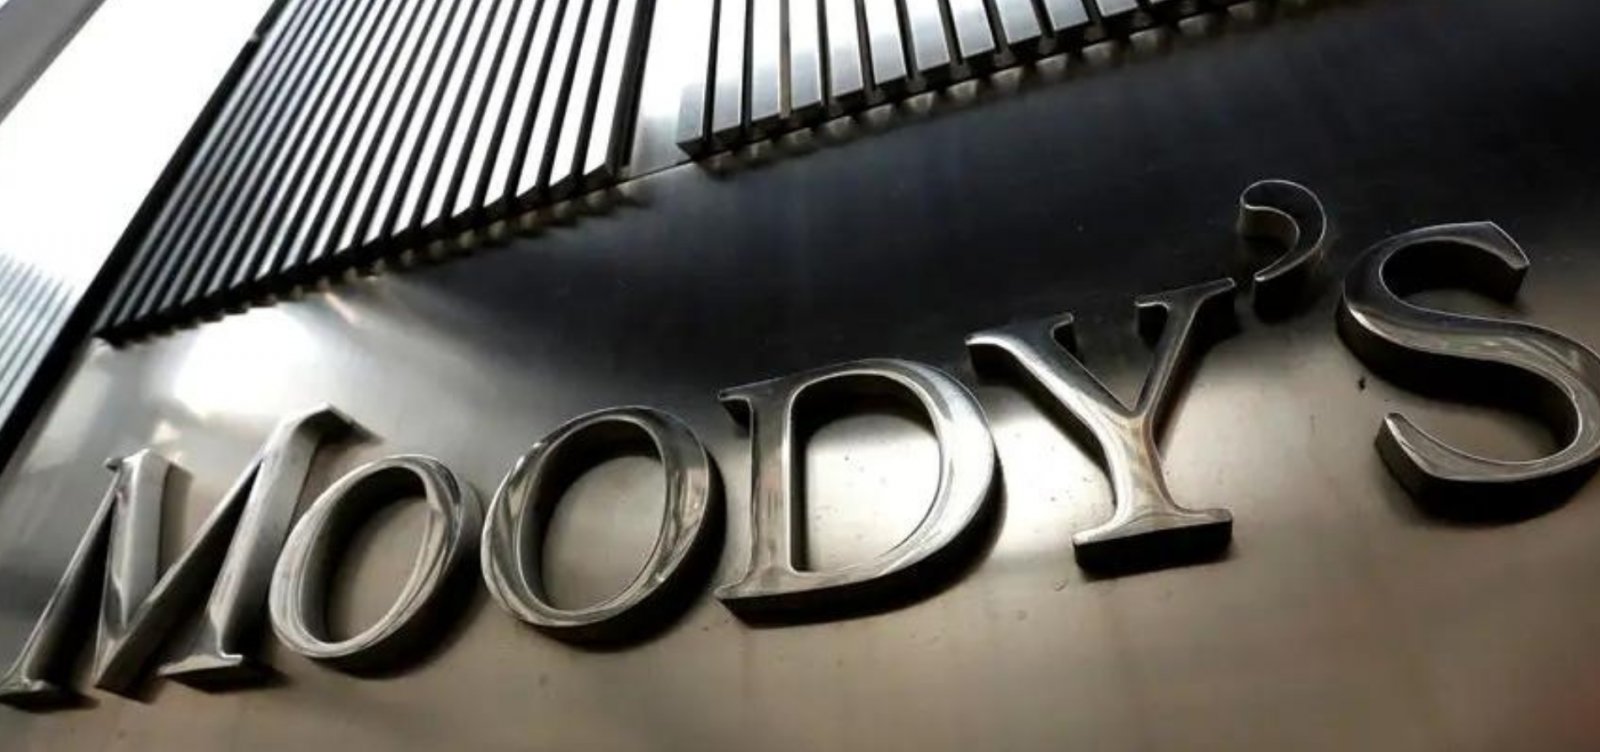 Agência Moody's altera para “positiva” perspectiva do Brasil; rating segue em “Ba2”